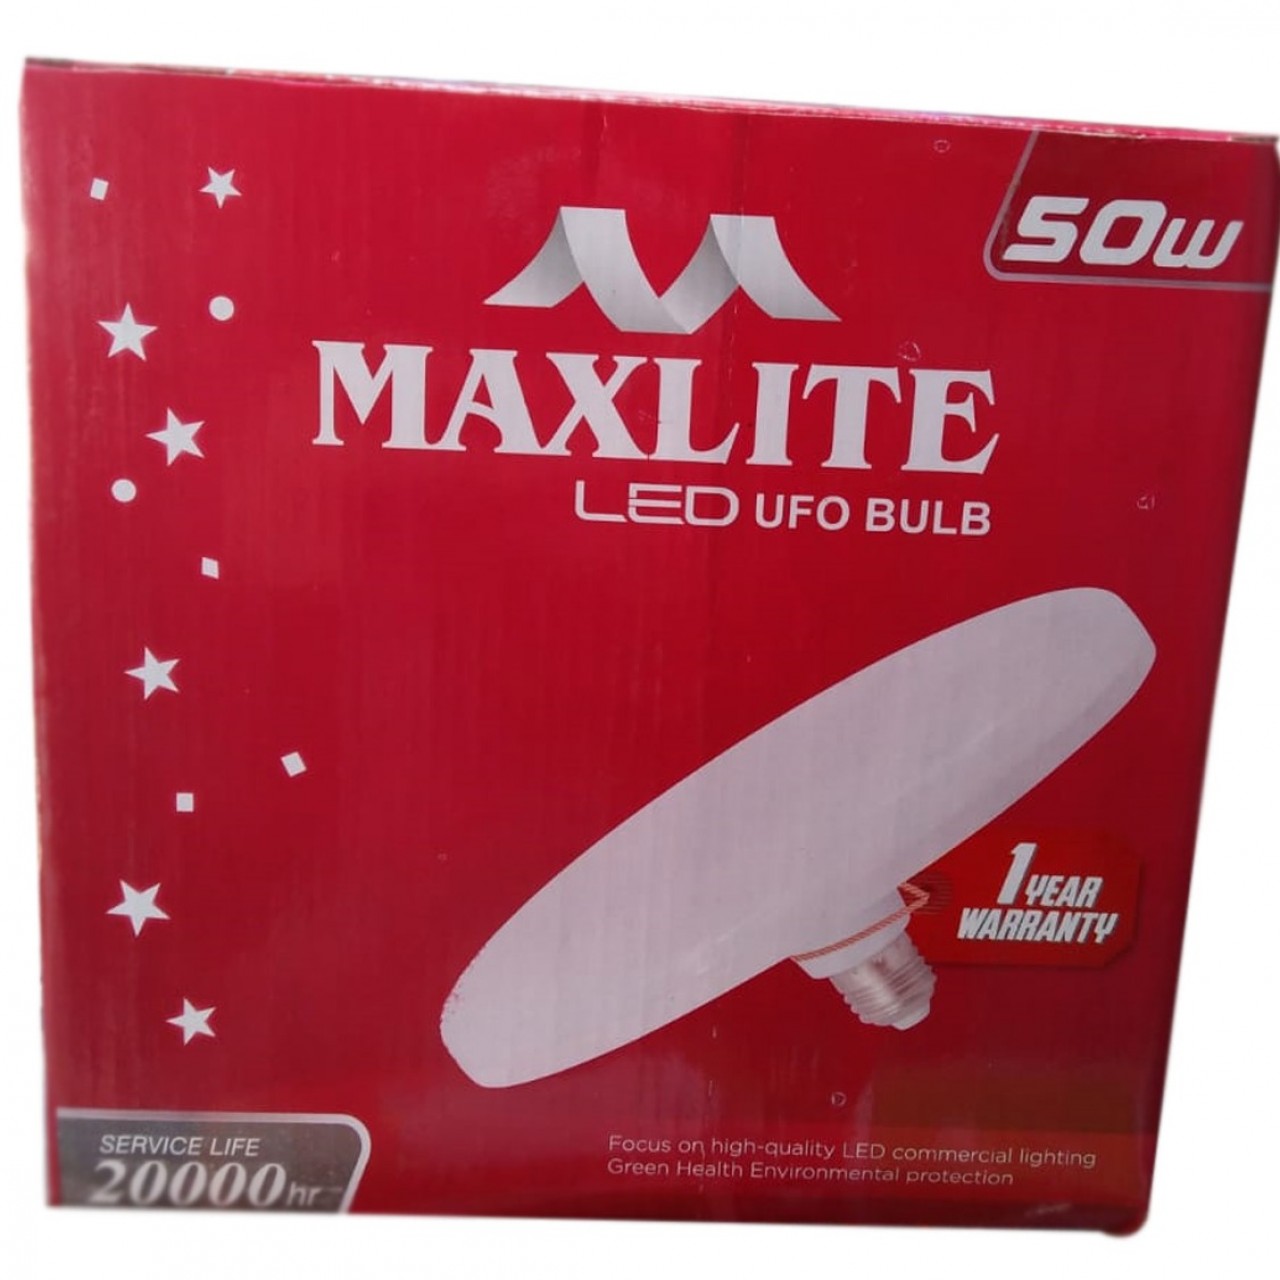 MAXLITE LED UFO Bulb - 50 Watt - 1 Year Warranty